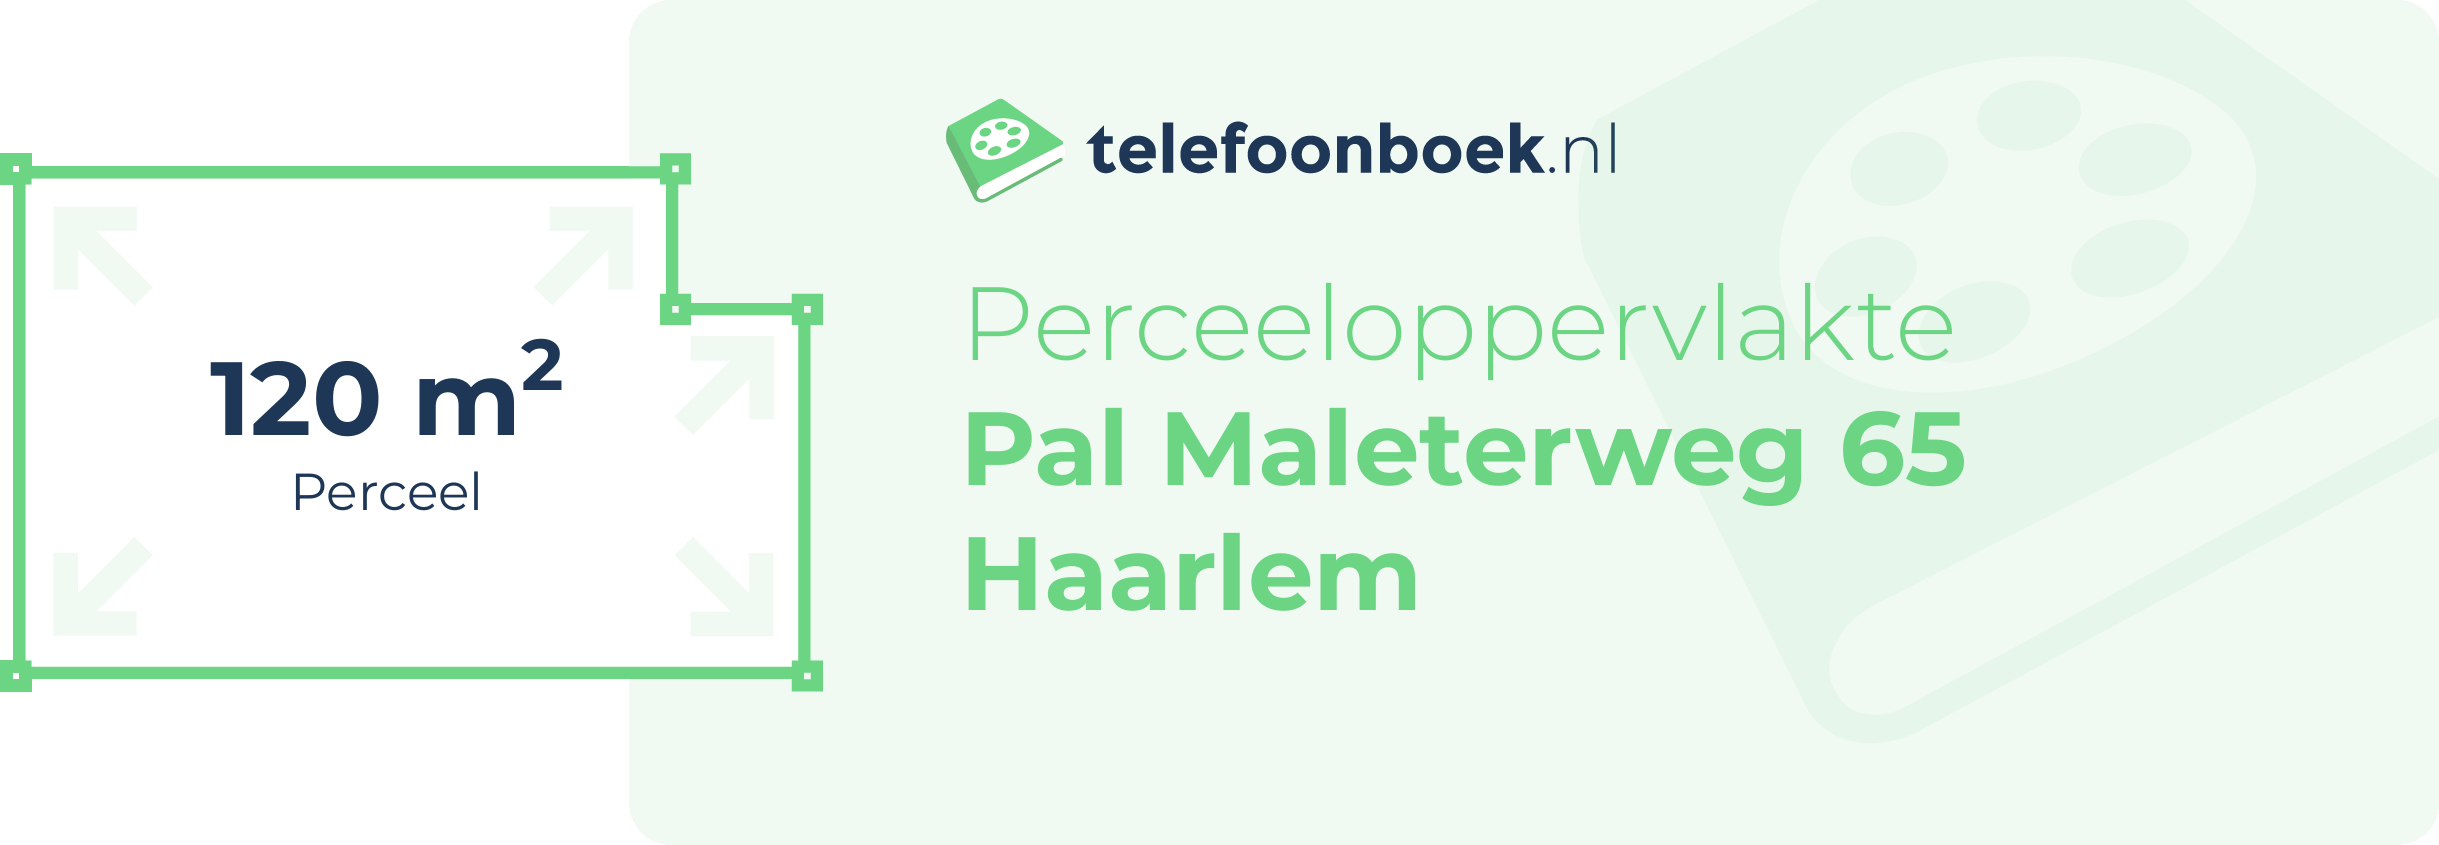 Perceeloppervlakte Pal Maleterweg 65 Haarlem